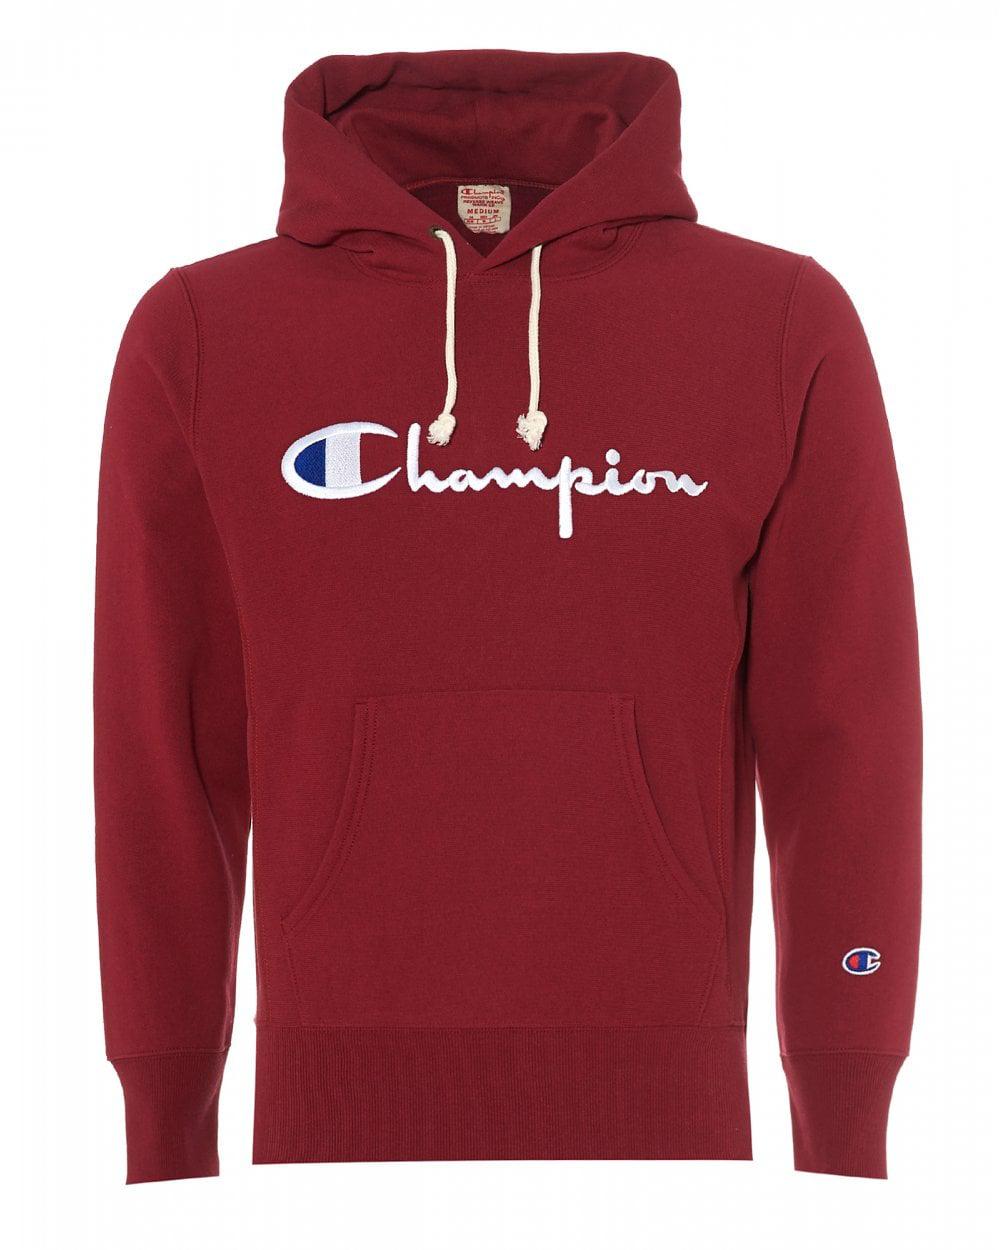 mens burgundy champion hoodie